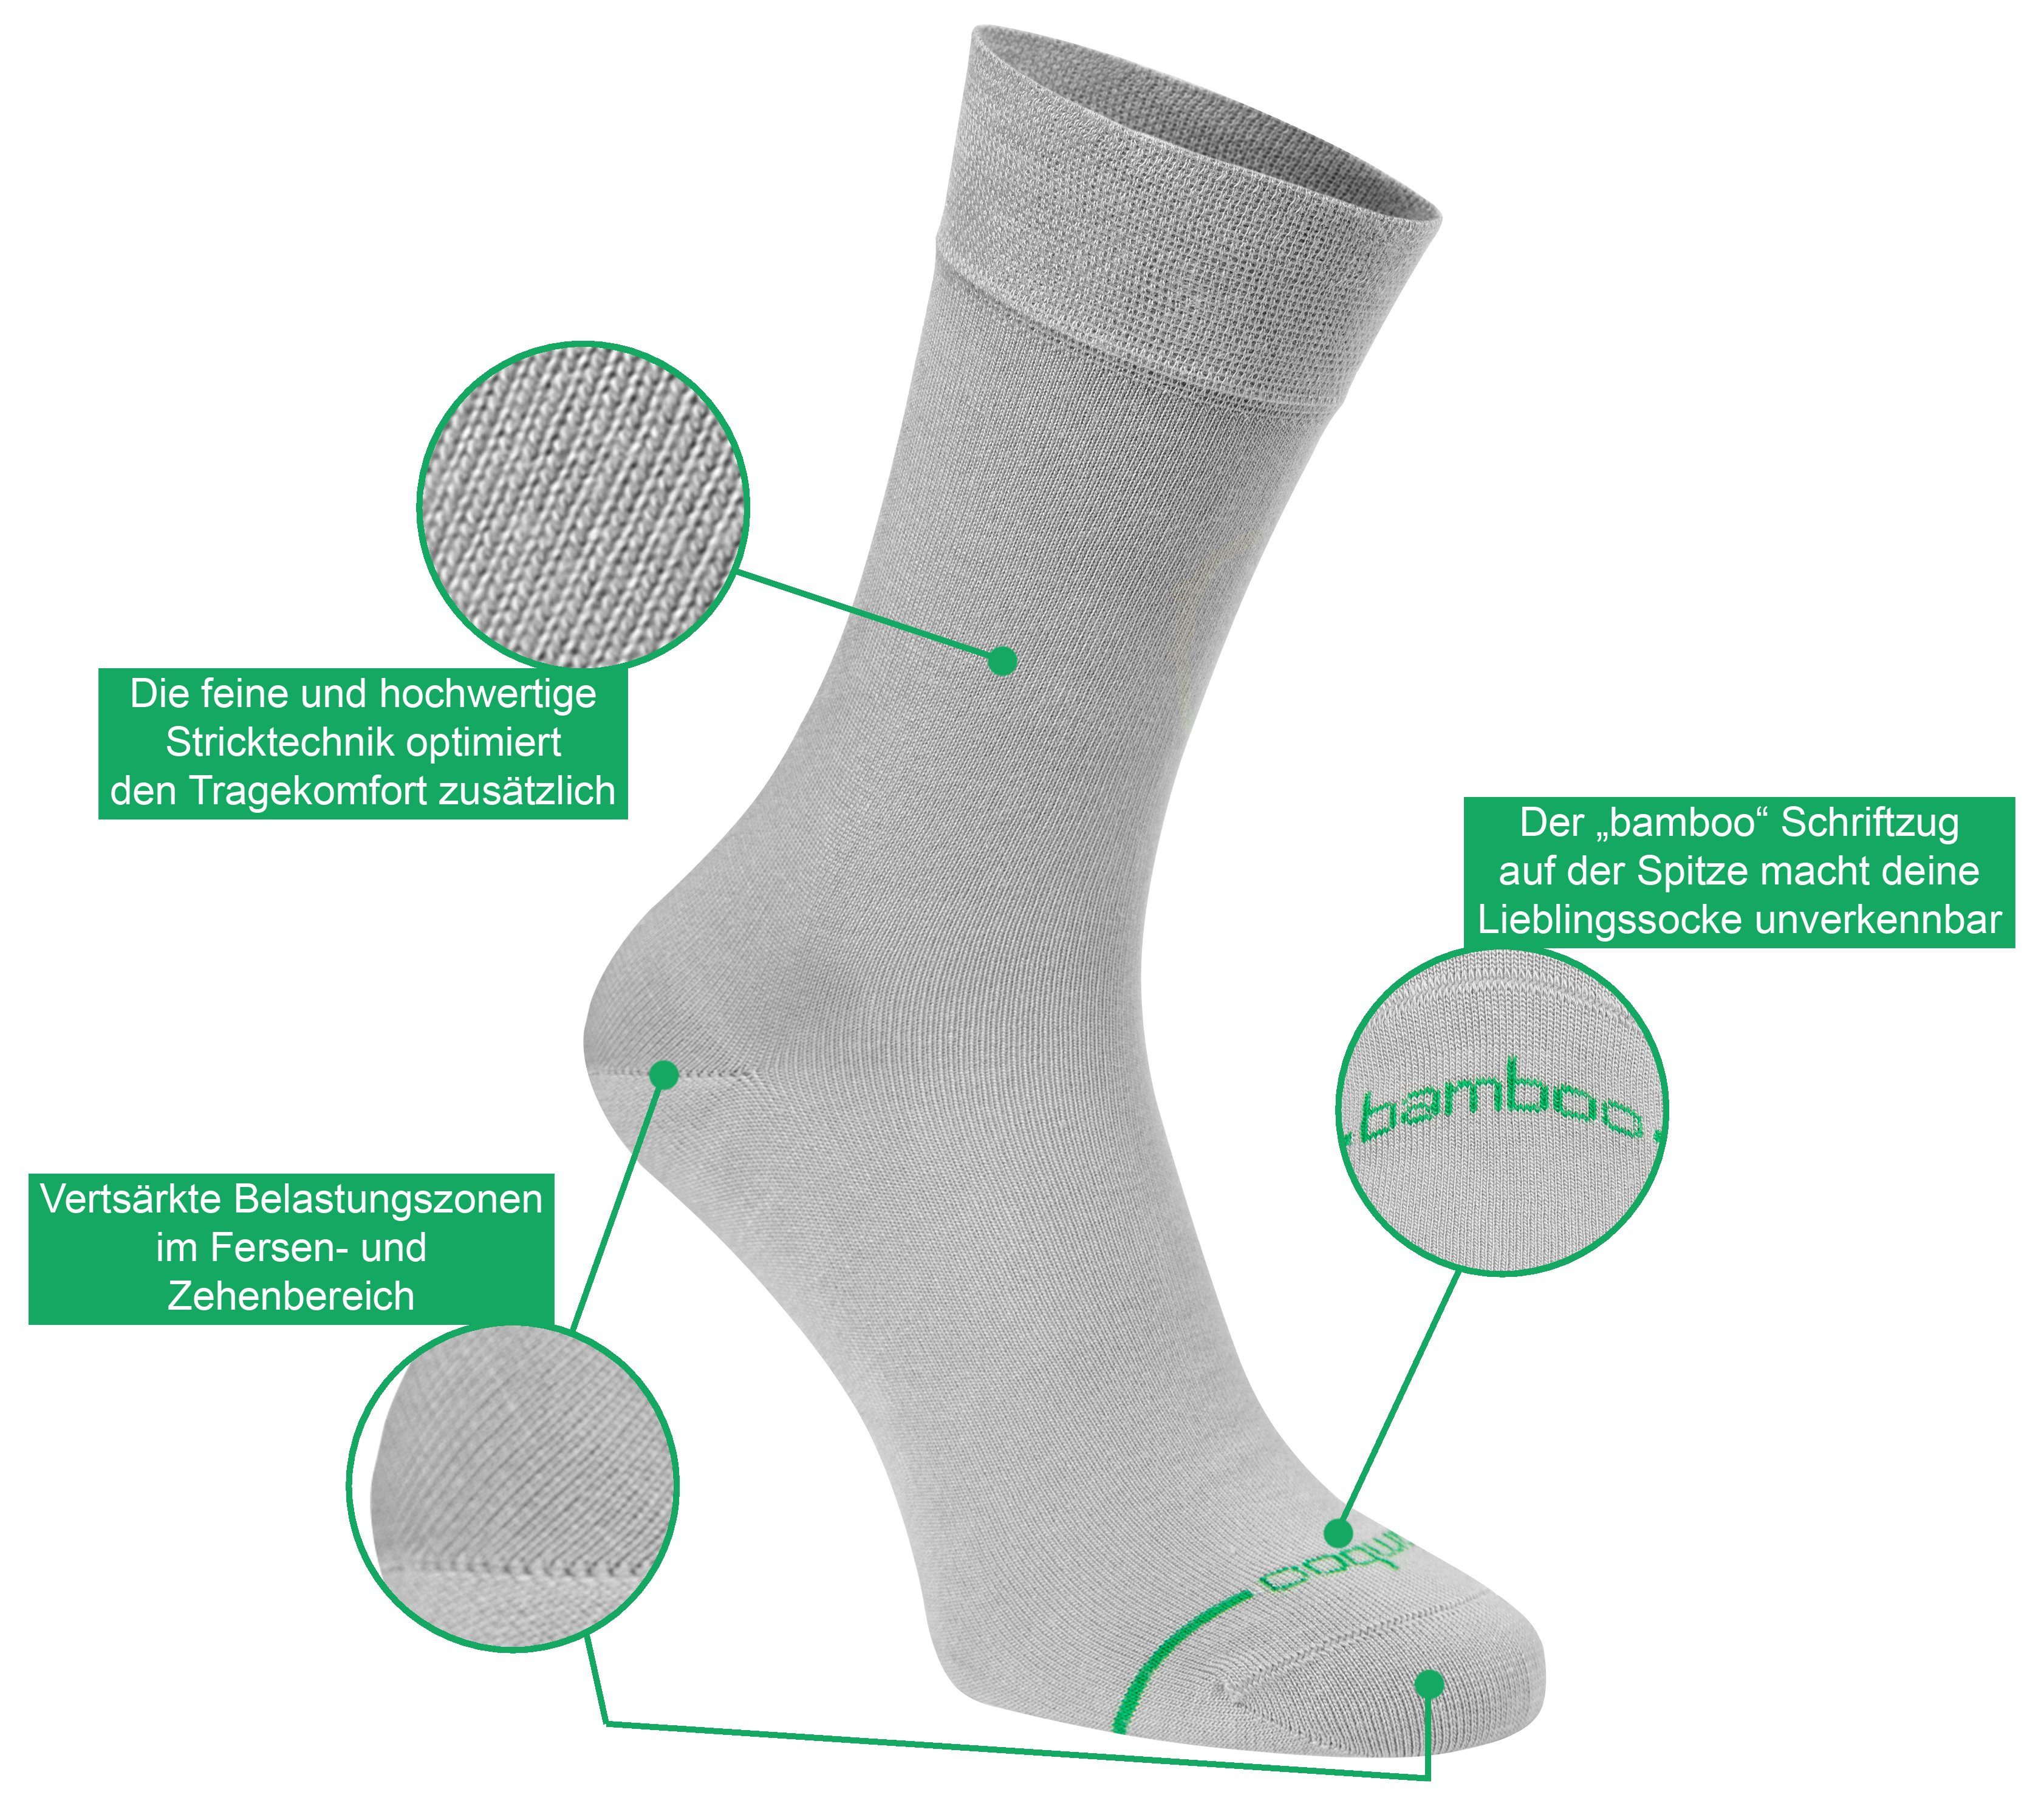 Atmungsaktive - Viskose Socken Bambus hochwertiger Business Paolo Renzo Socken Herren Hellgrau Gesundheitssocken (3-Paar) Casual Geruchshemmend aus /